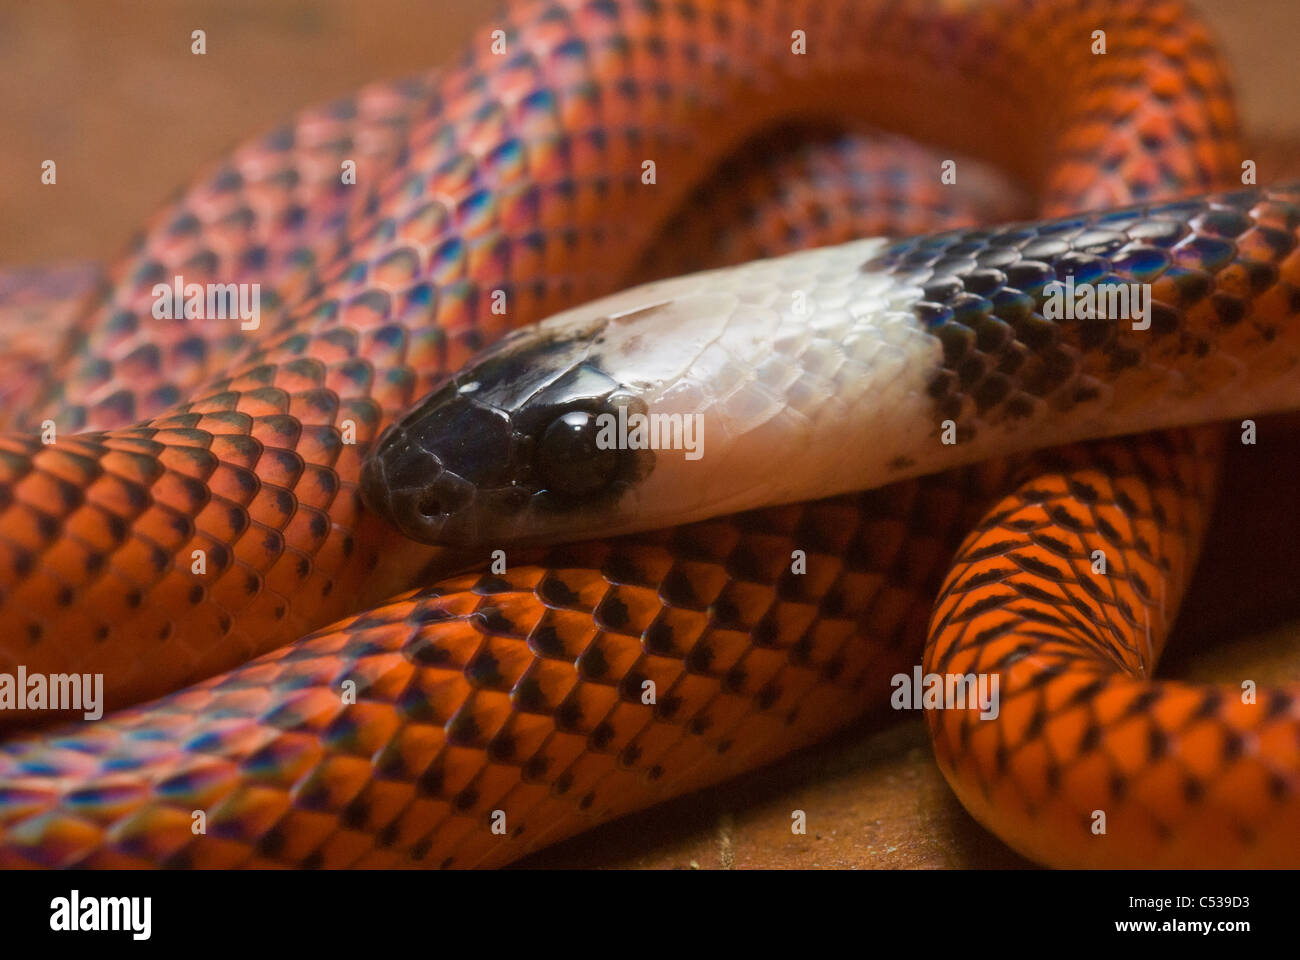 Black-collared (aka Amazon egg eater; Drepanoides anomalous) snake in the Peruvian Amazon rainforest Stock Photo